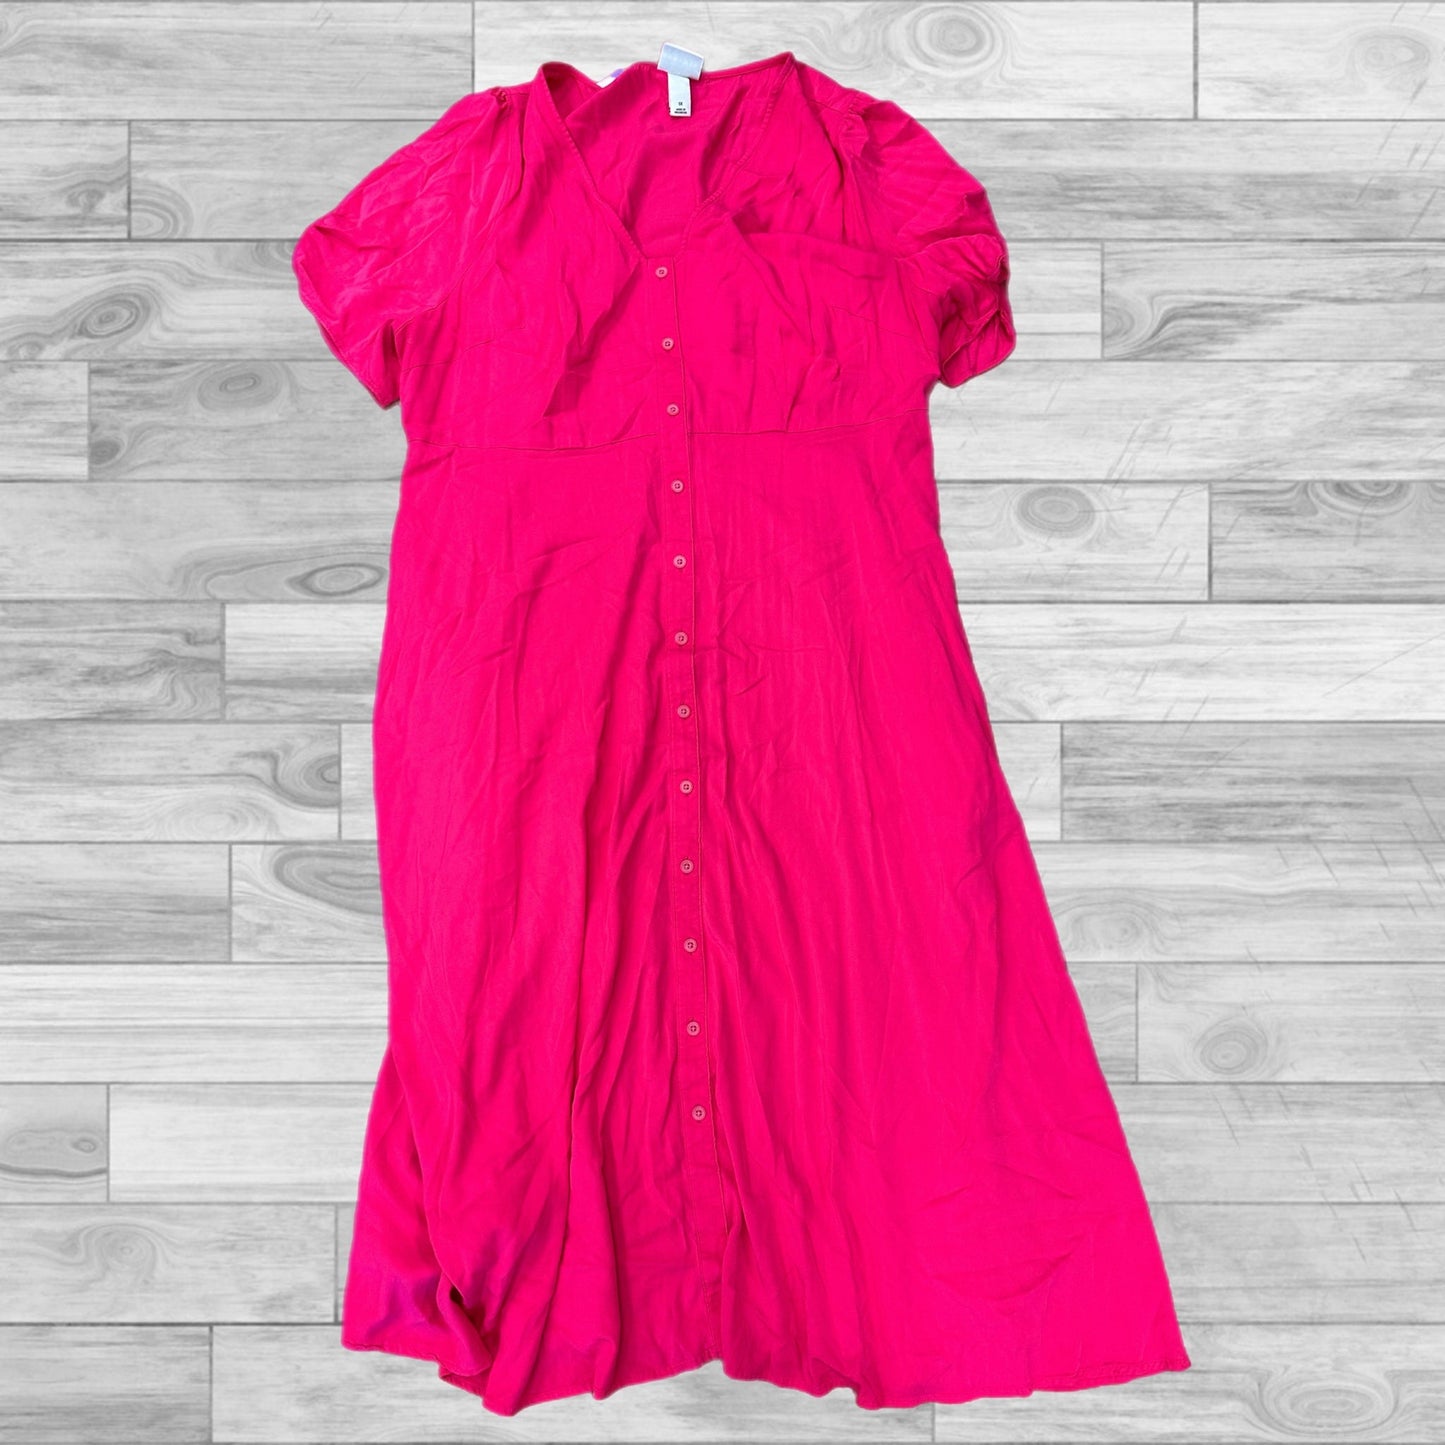 Pink Dress Casual Maxi Ava & Viv, Size 1x